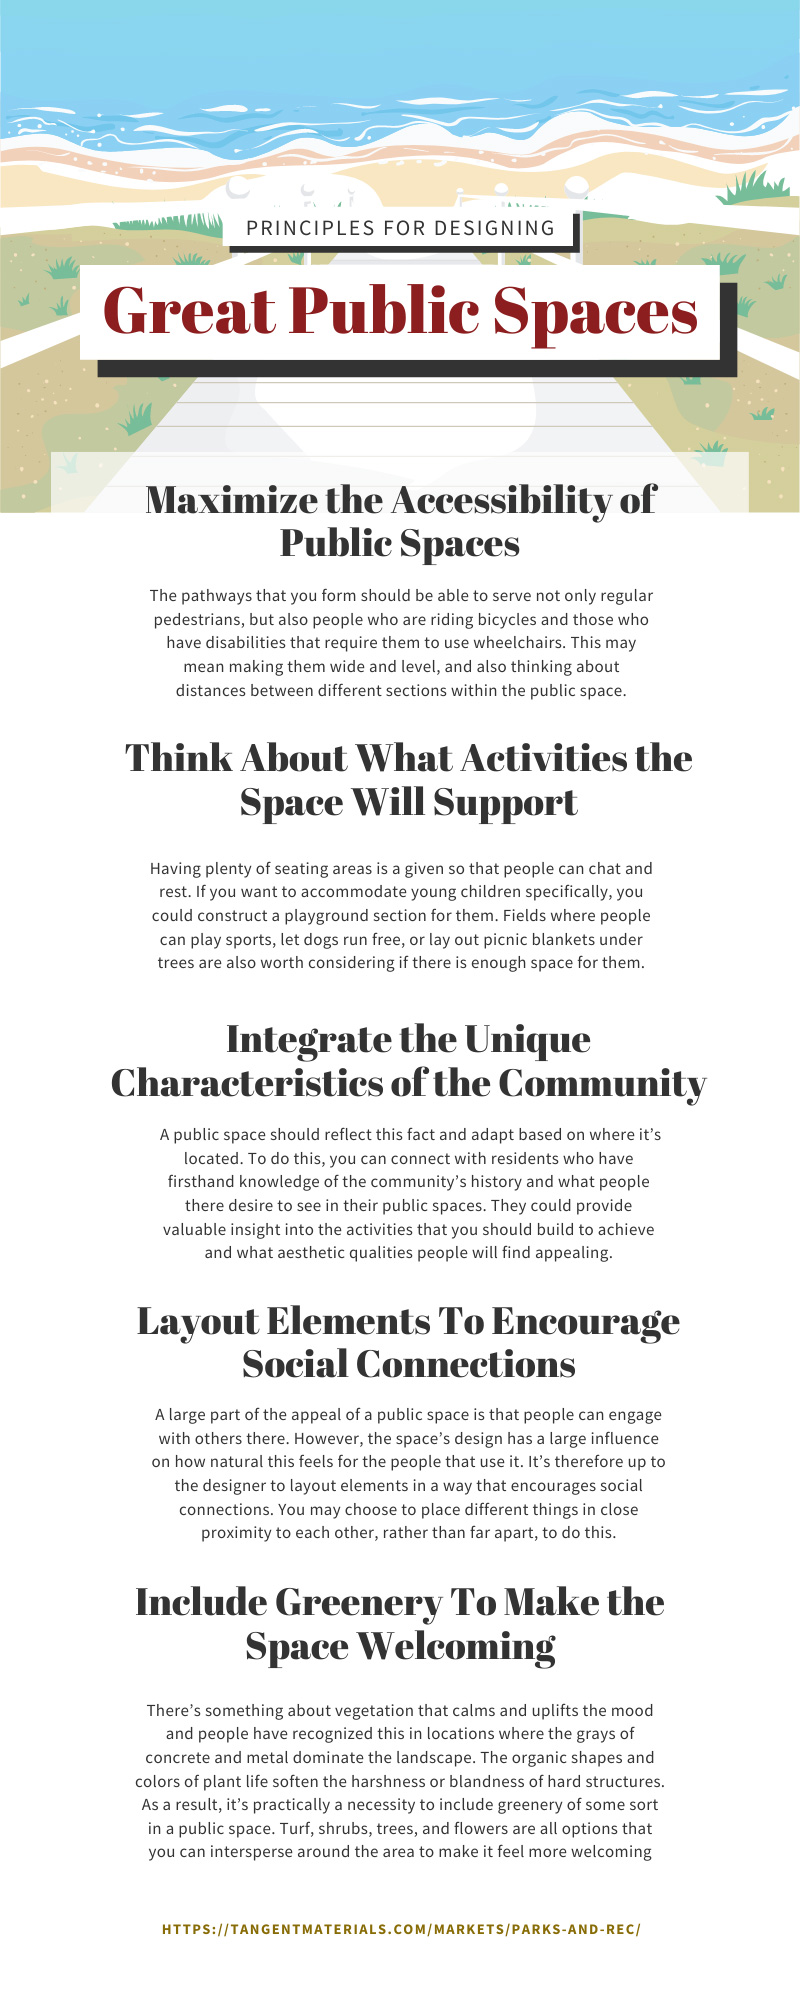 Principles for Designing Great Public Spaces